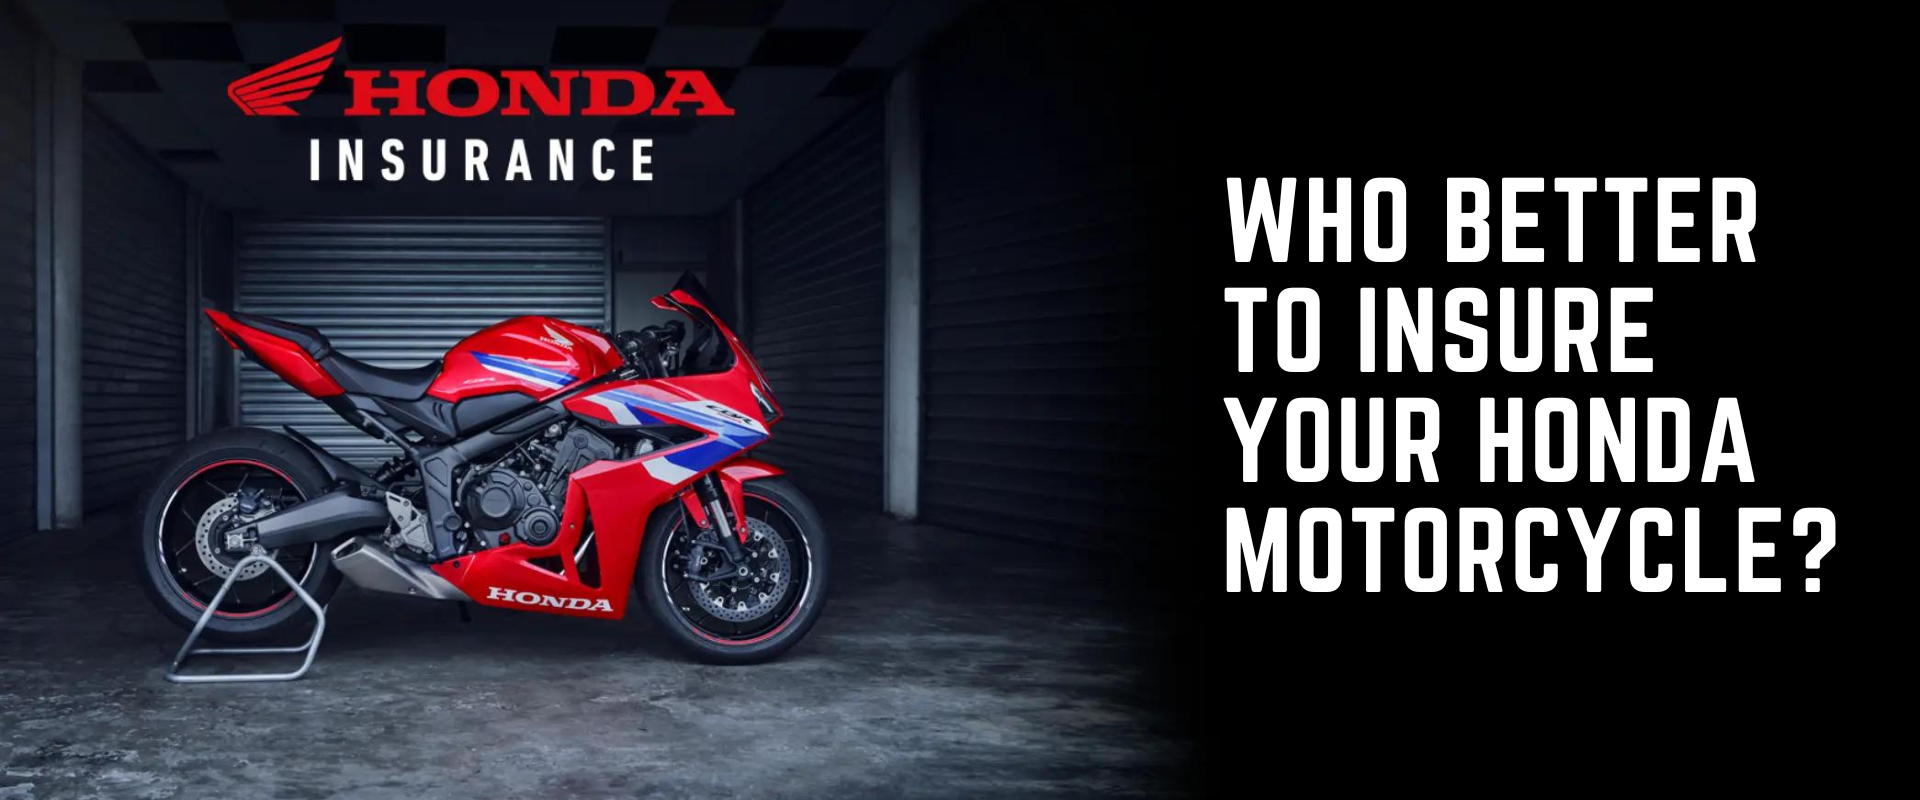 Honda Insurance Plans For Motorcycles